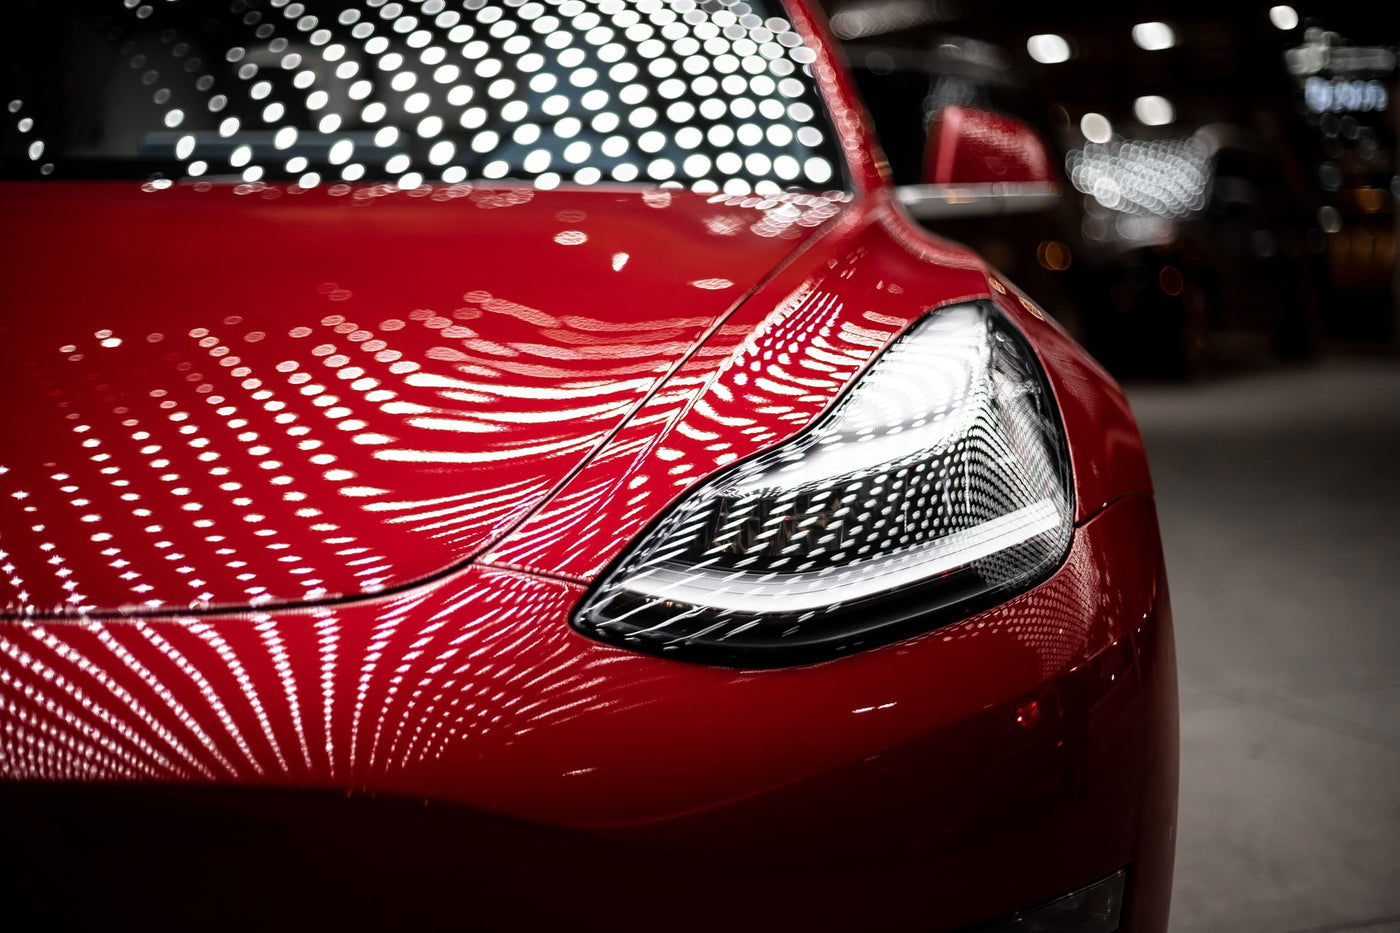 Tesla’s vehicle deliveries rose despite an ‘exceptionally difficult’ quarter